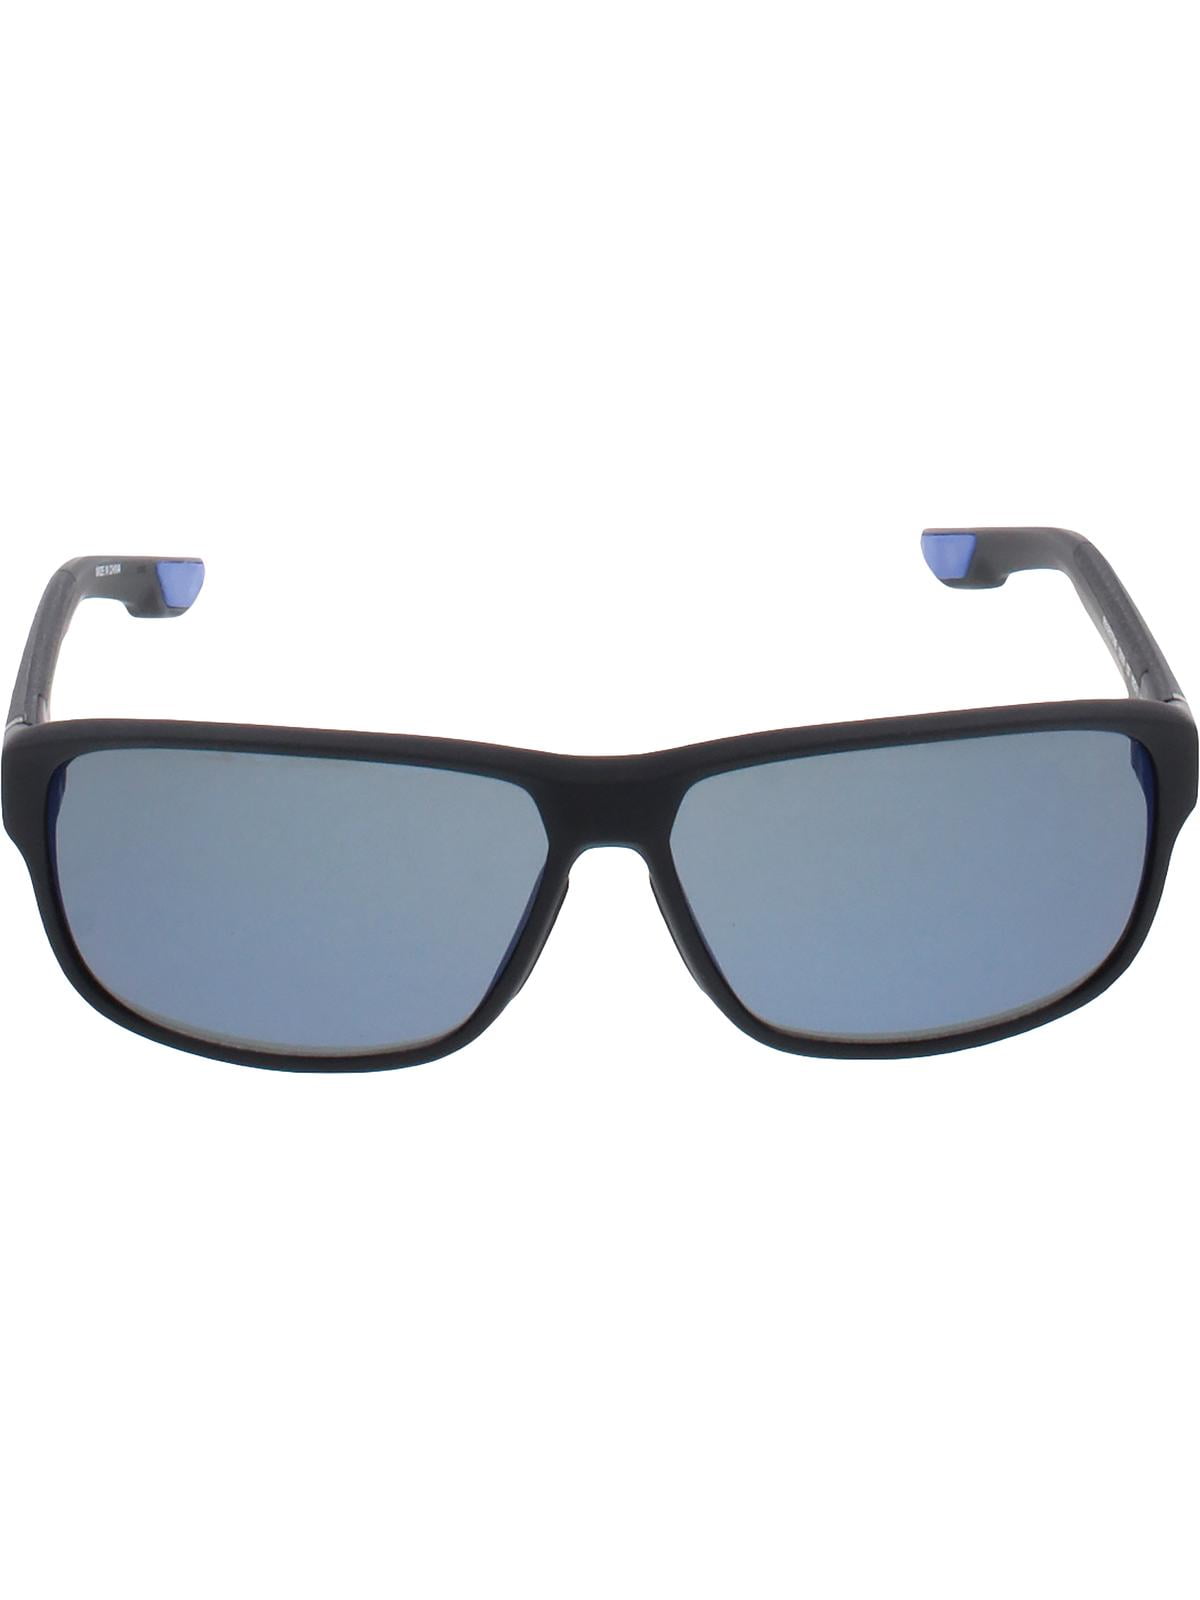 Columbia Men's Ridgestone Rectangular Sunglasses